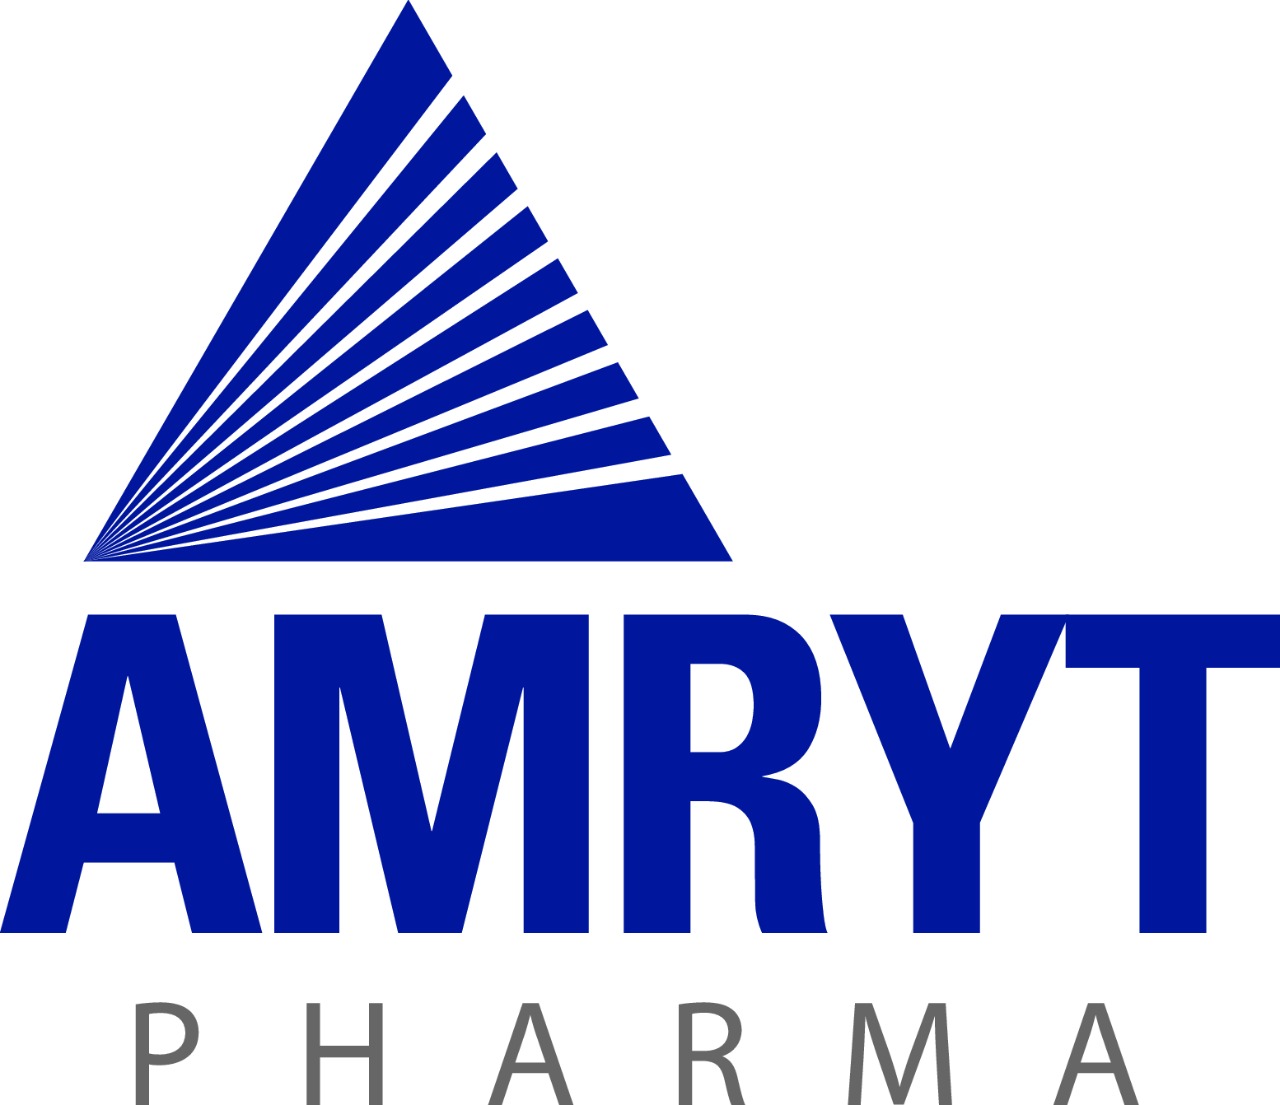 Amryt Pharma logo